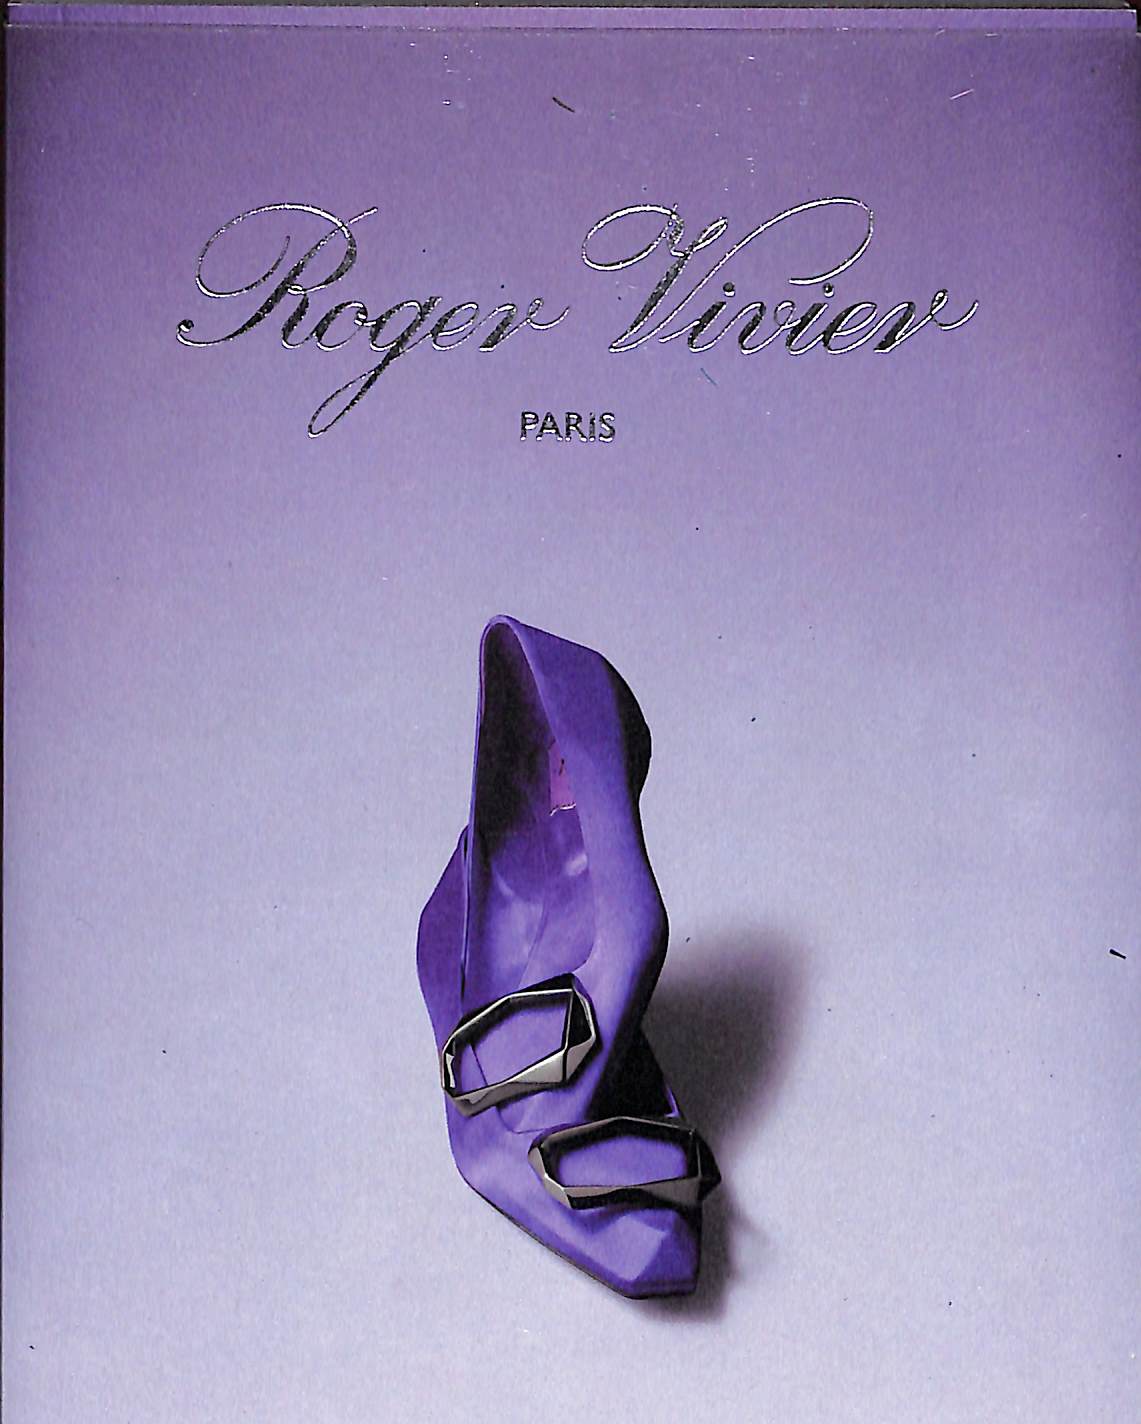 Roger Vivier Paris: Collection Automne-Hiver Fall-Winter 2008-2009